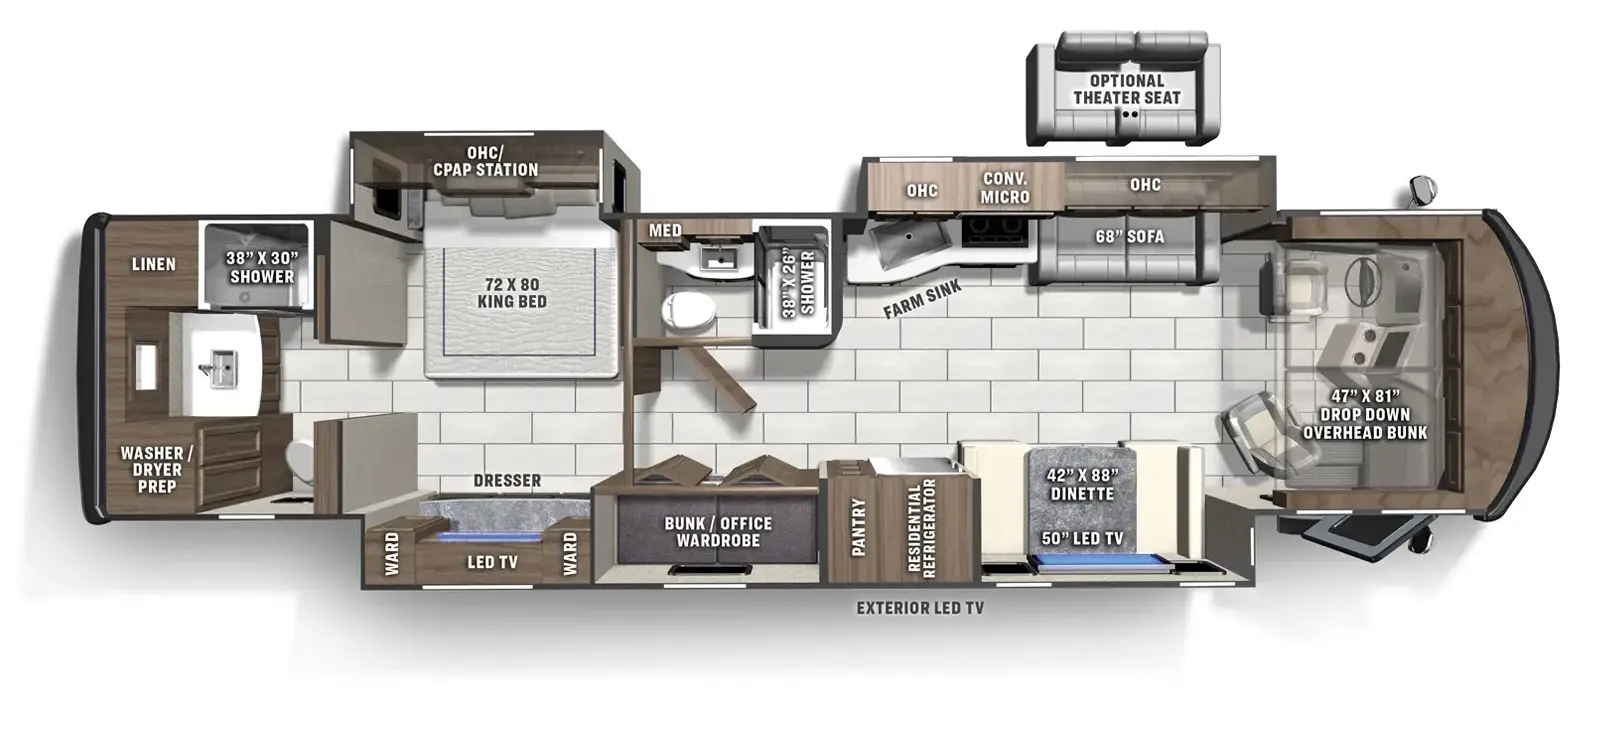 402TS Floorplan Image